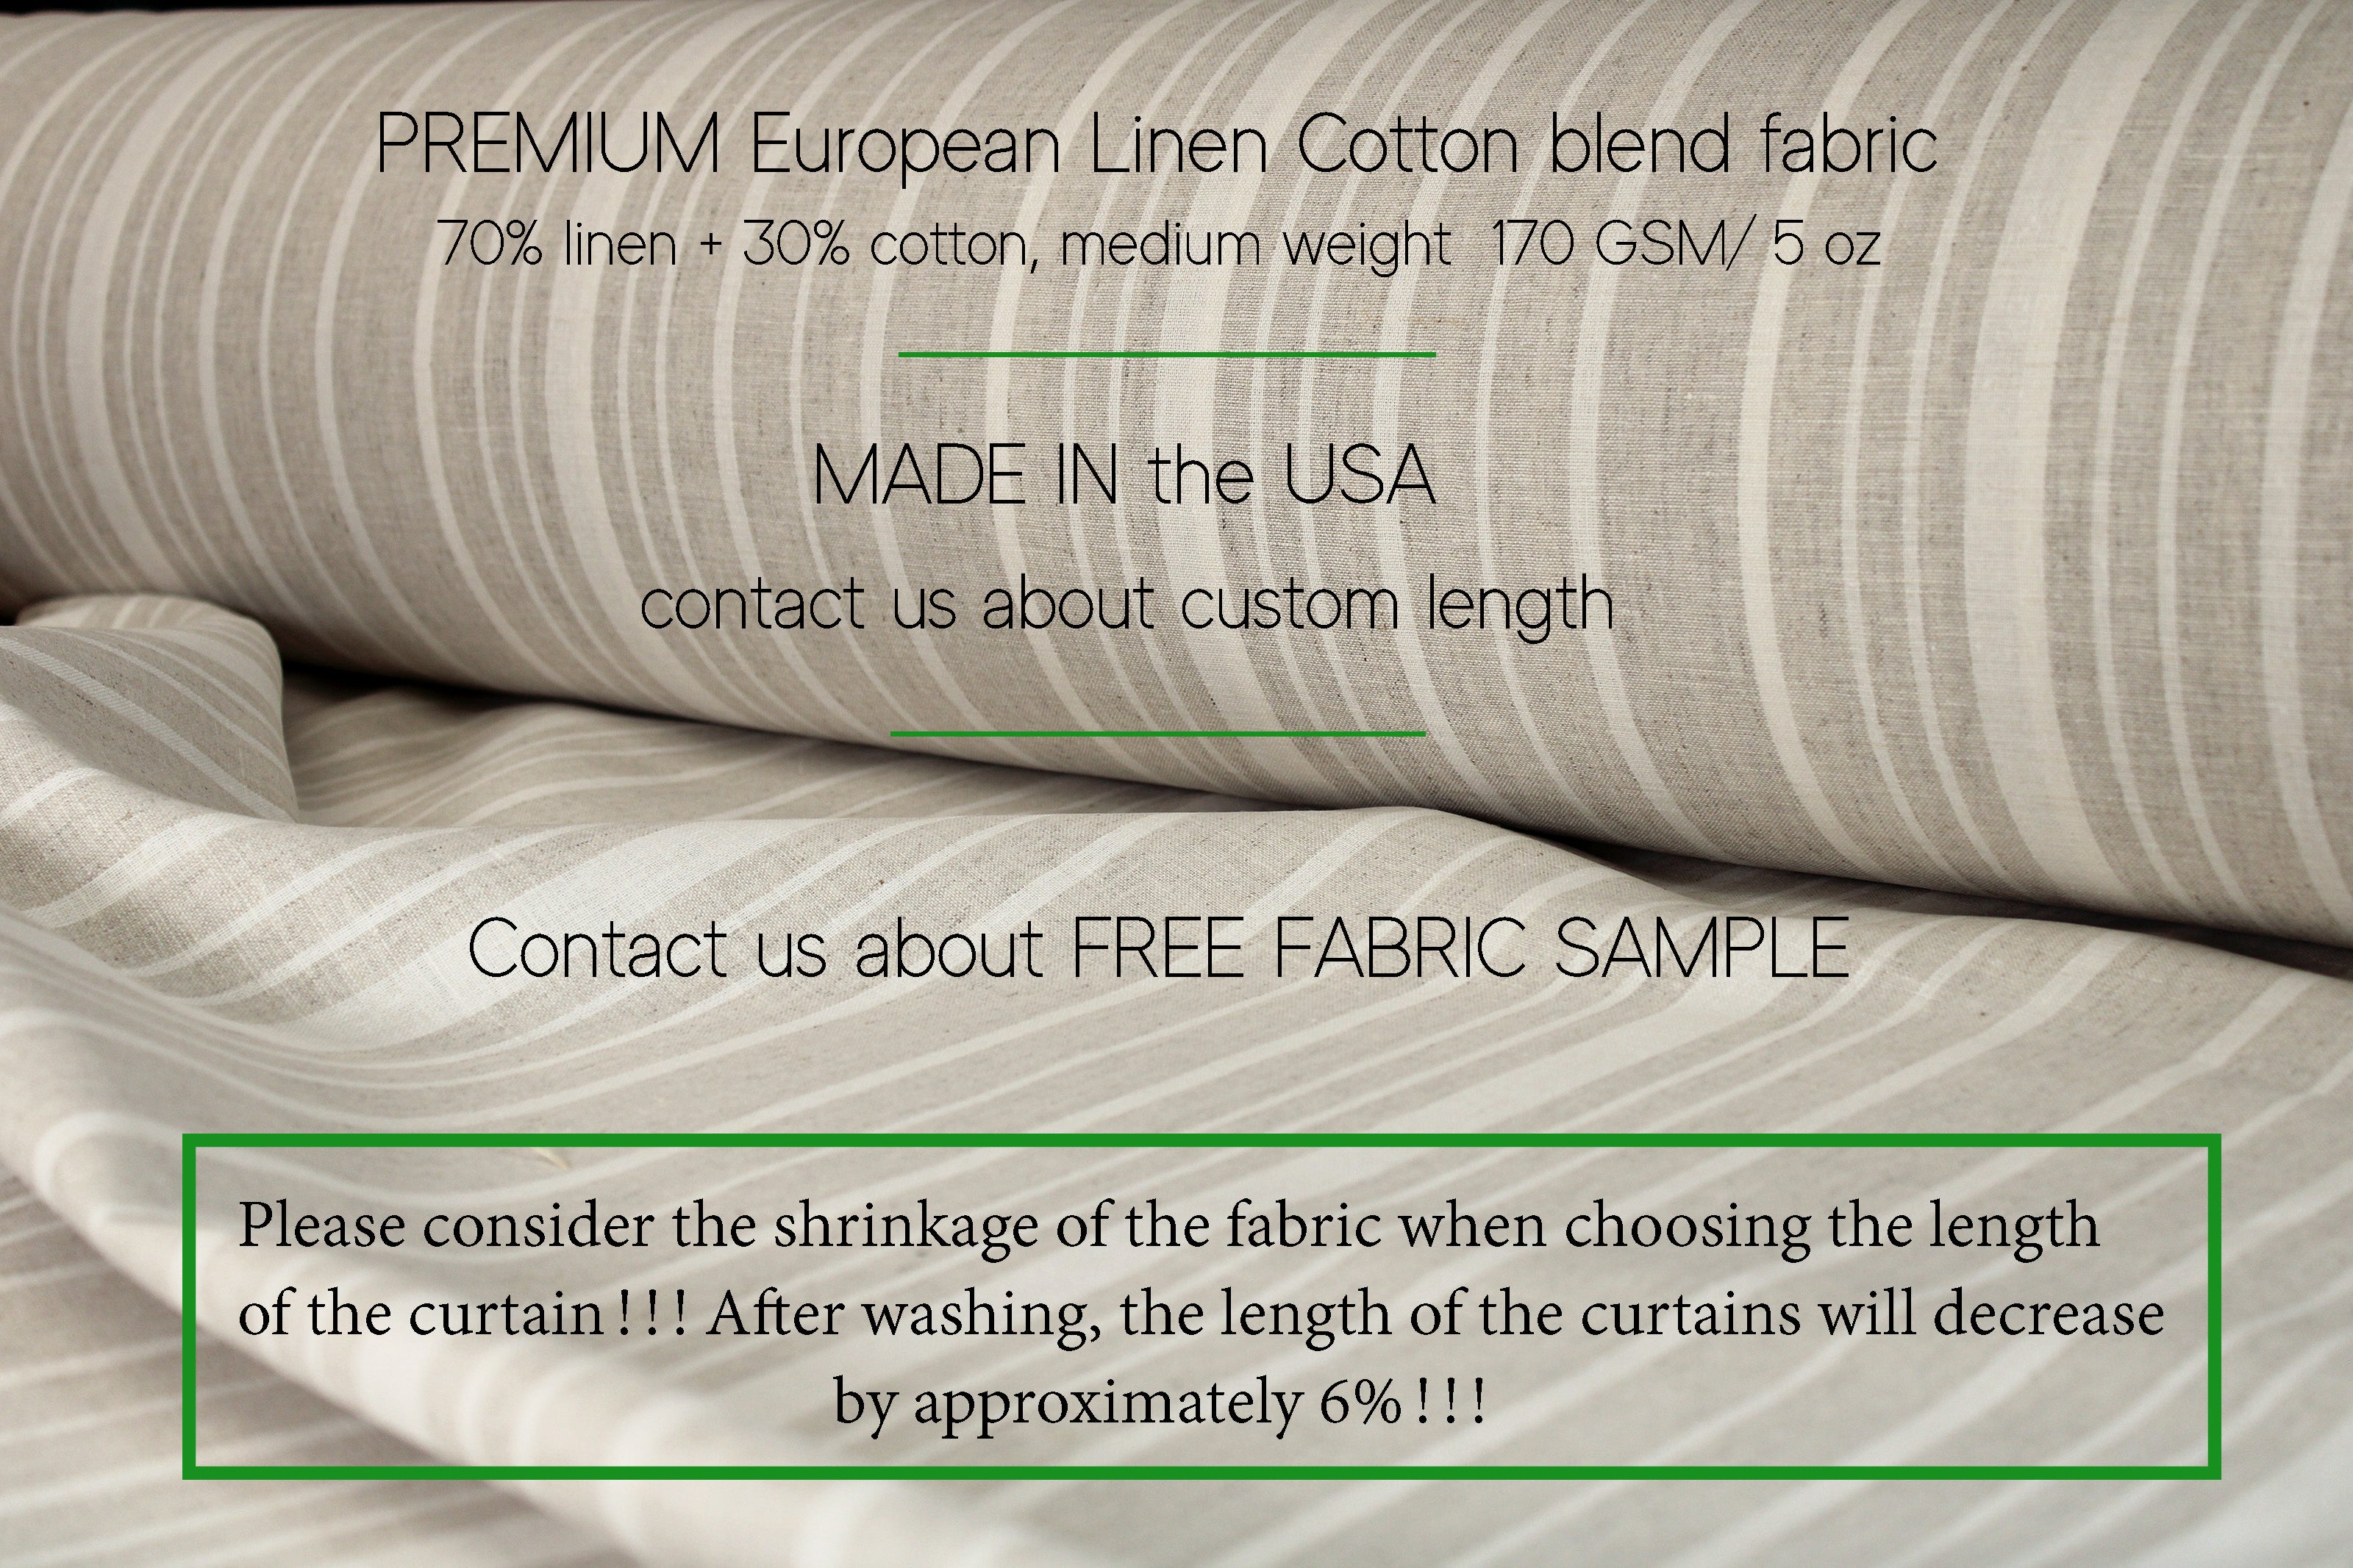 Wide Linen Curtains Rod pocket Ruffles / European Striped Linen Curtains for Living room / CUSTOM Linen Curtains